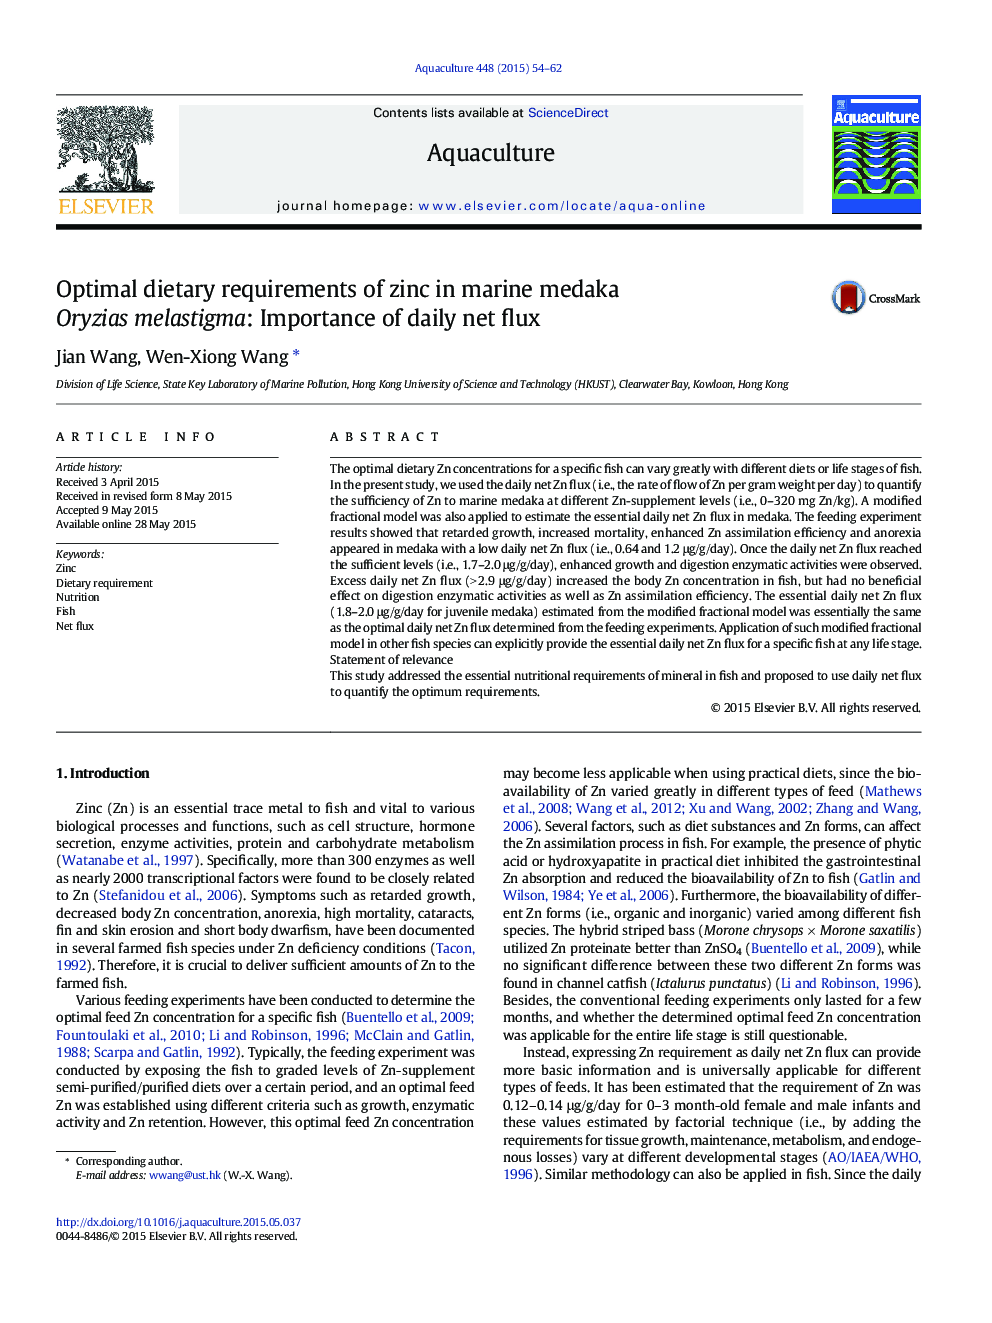 Optimal dietary requirements of zinc in marine medaka Oryzias melastigma: Importance of daily net flux